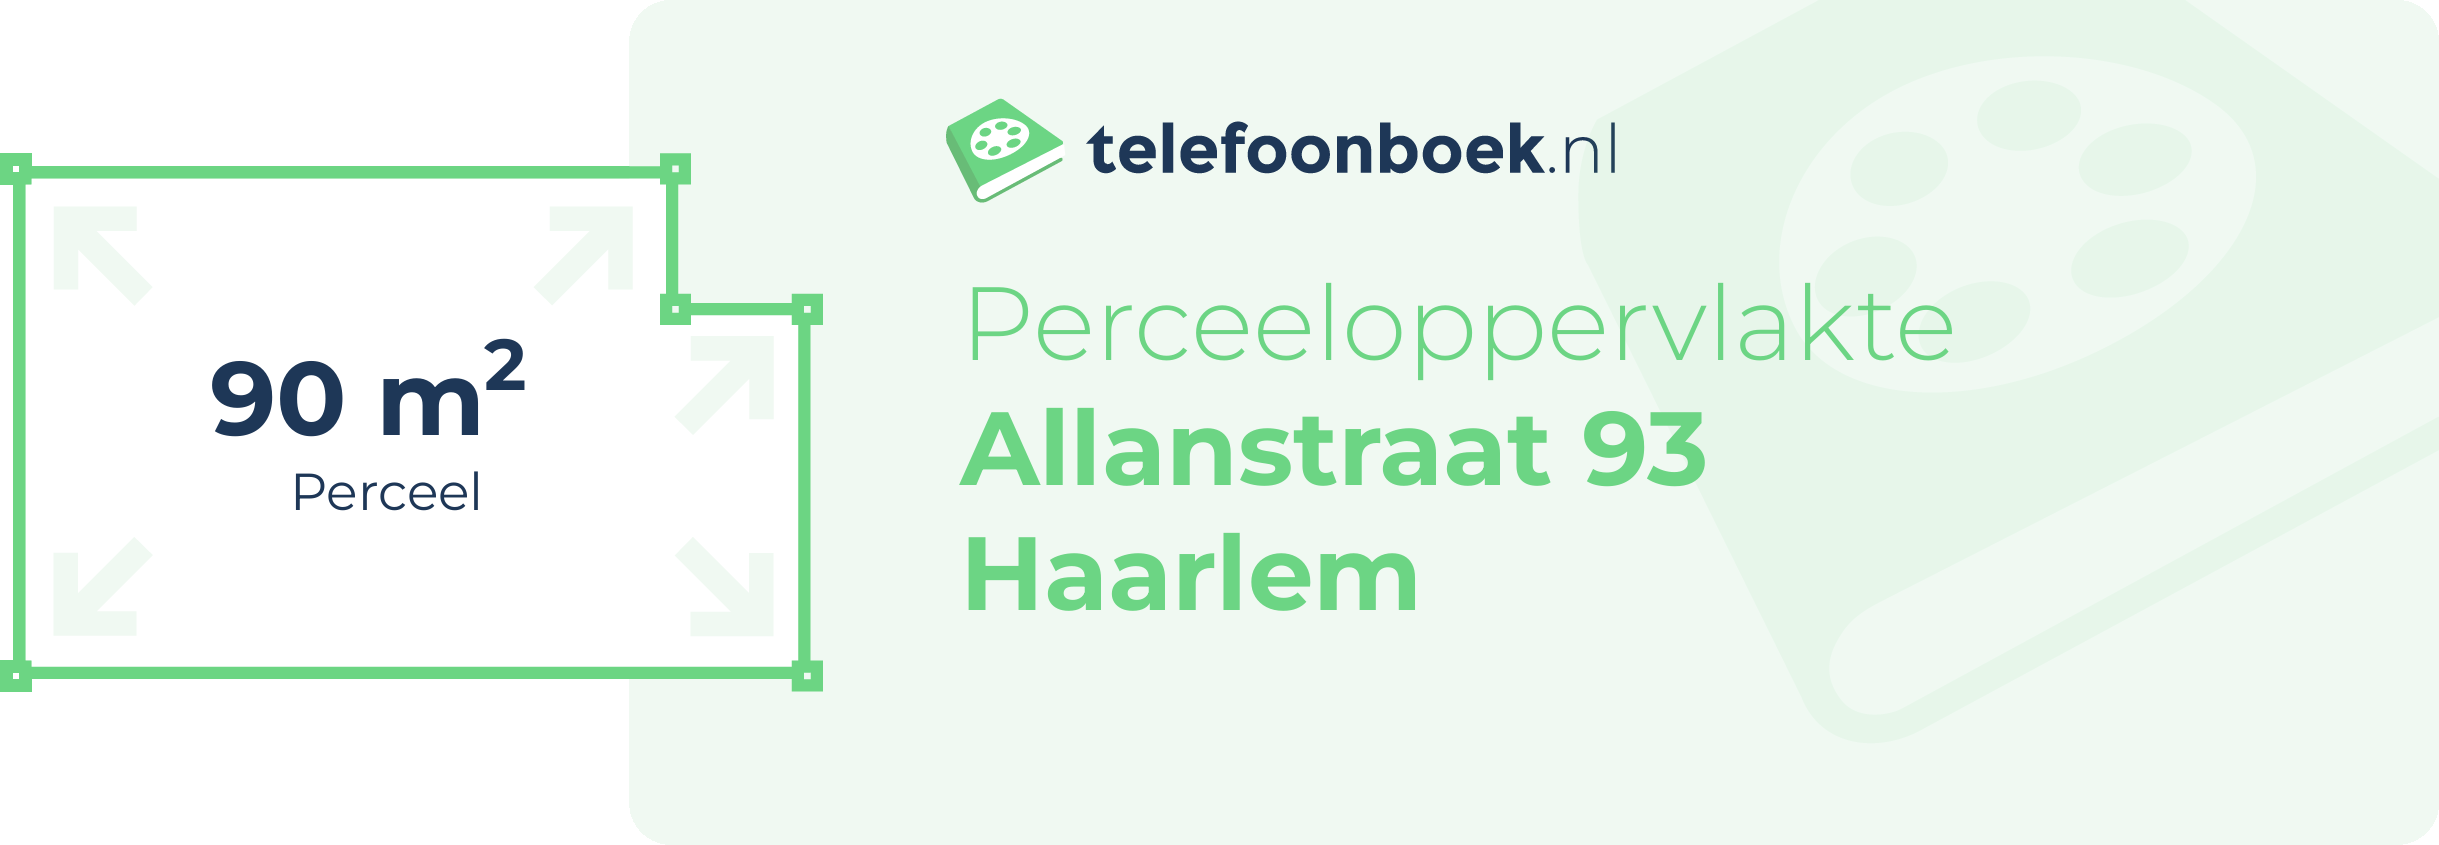 Perceeloppervlakte Allanstraat 93 Haarlem